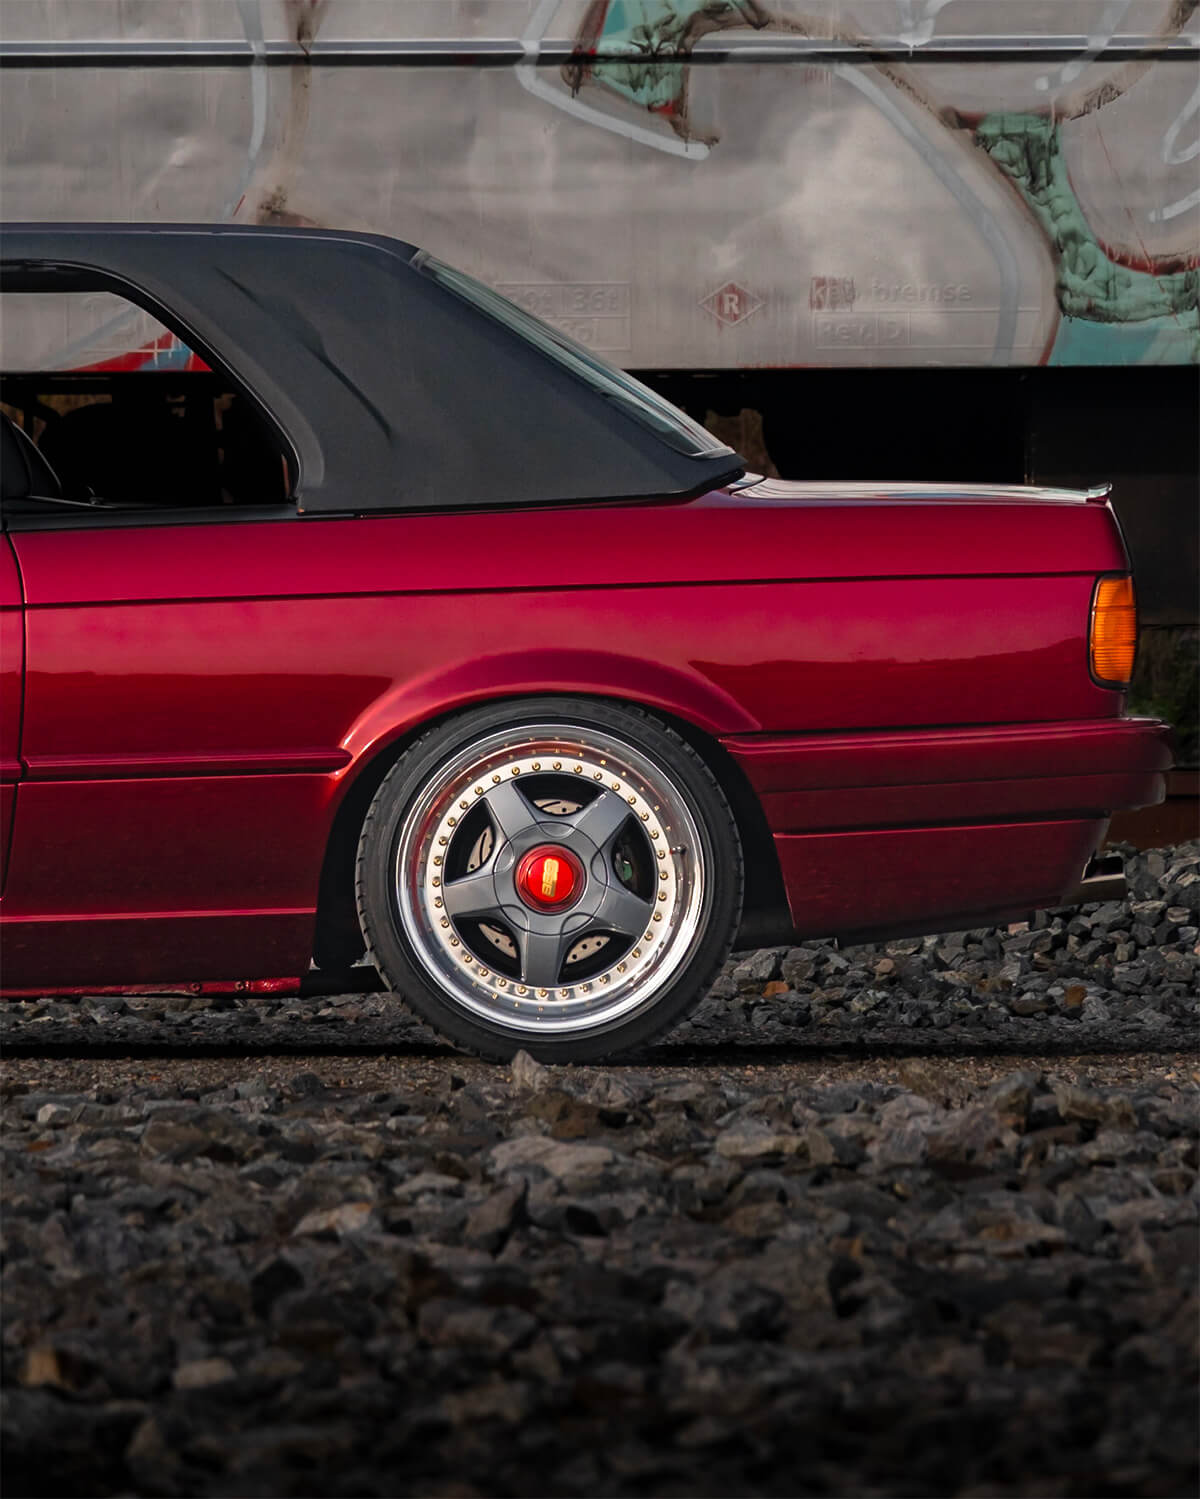 BMW E30 On BBS RF cuatom wheels with red center caps